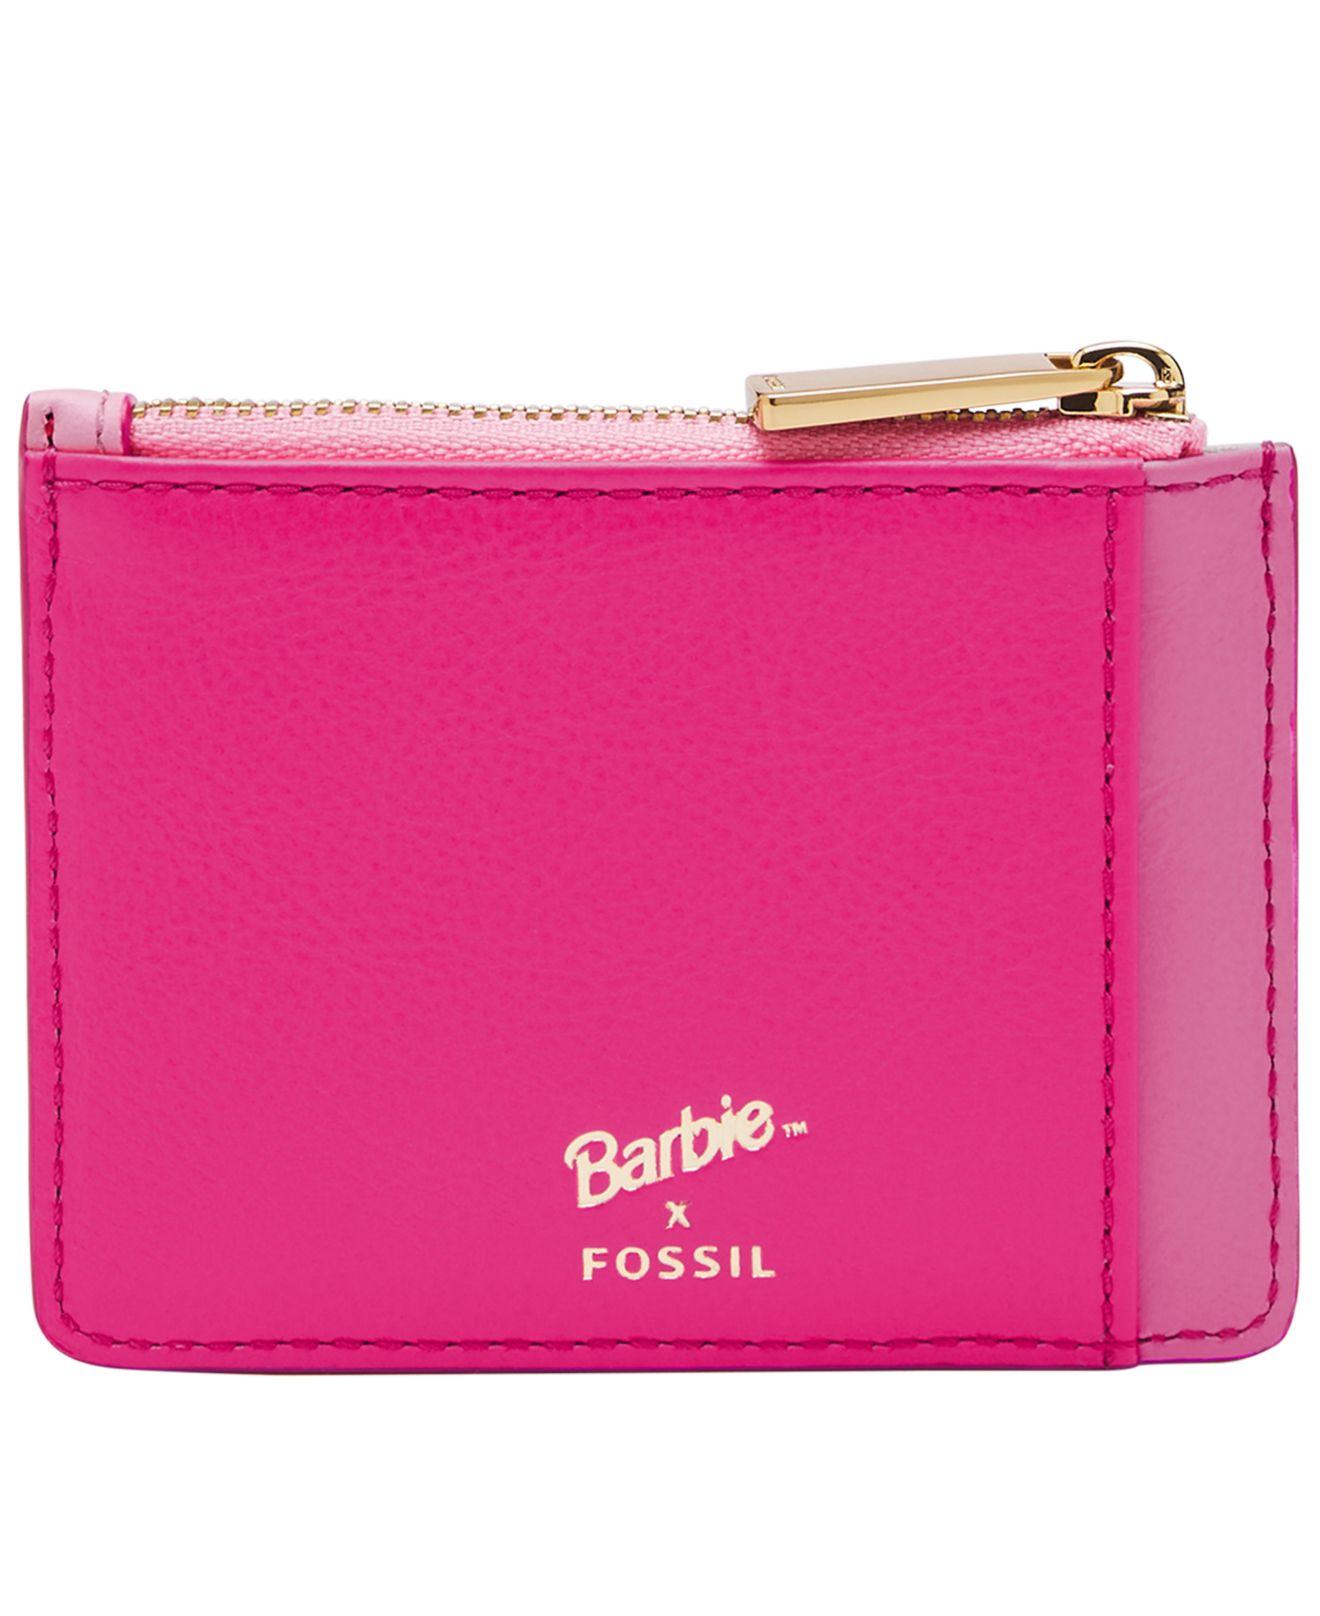 Fossil Barbie Zip Card Case in Pink | Lyst